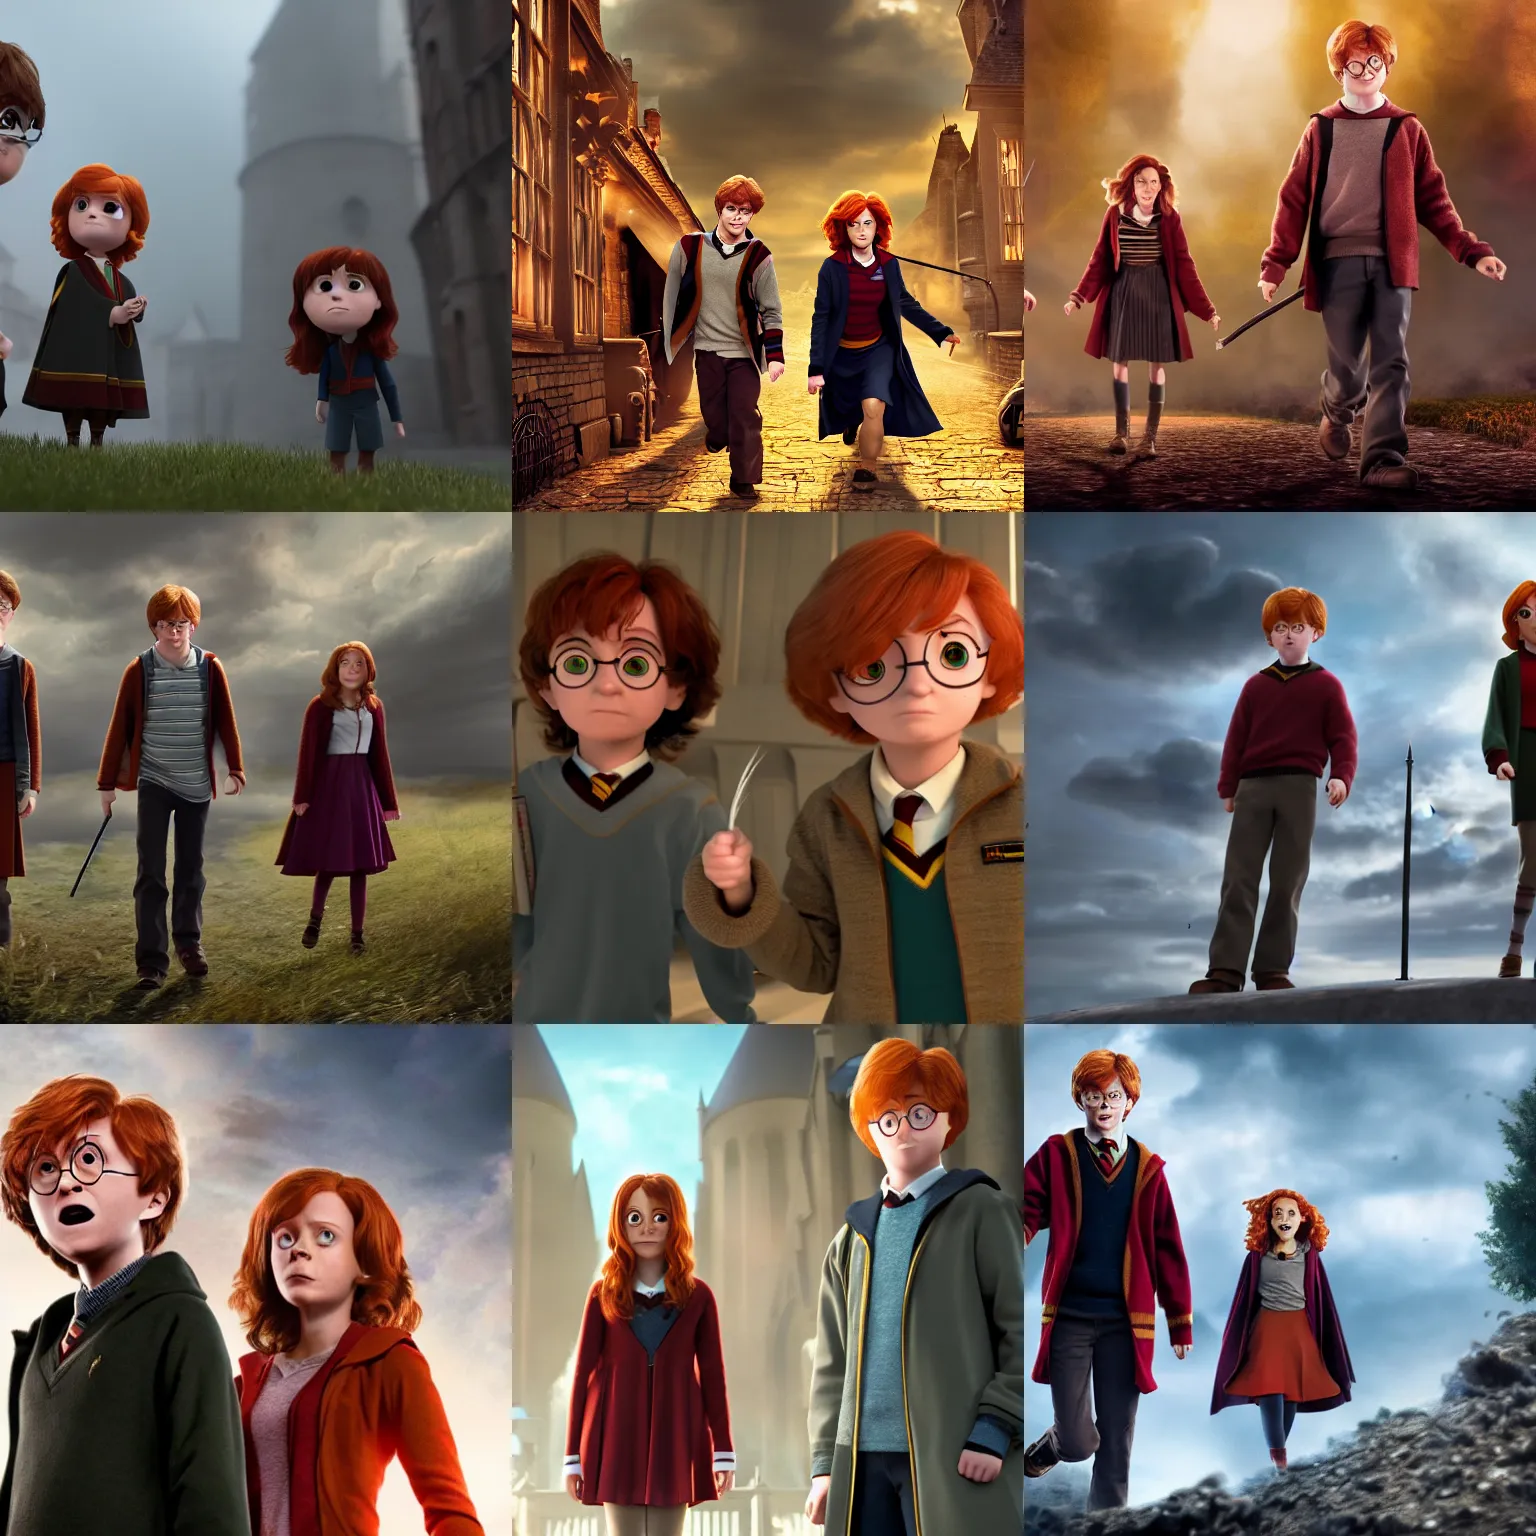 Prompt: Harry Potter, Ron Weasley and Hermione Granger in disney pixar style, cinematic shot, 4K